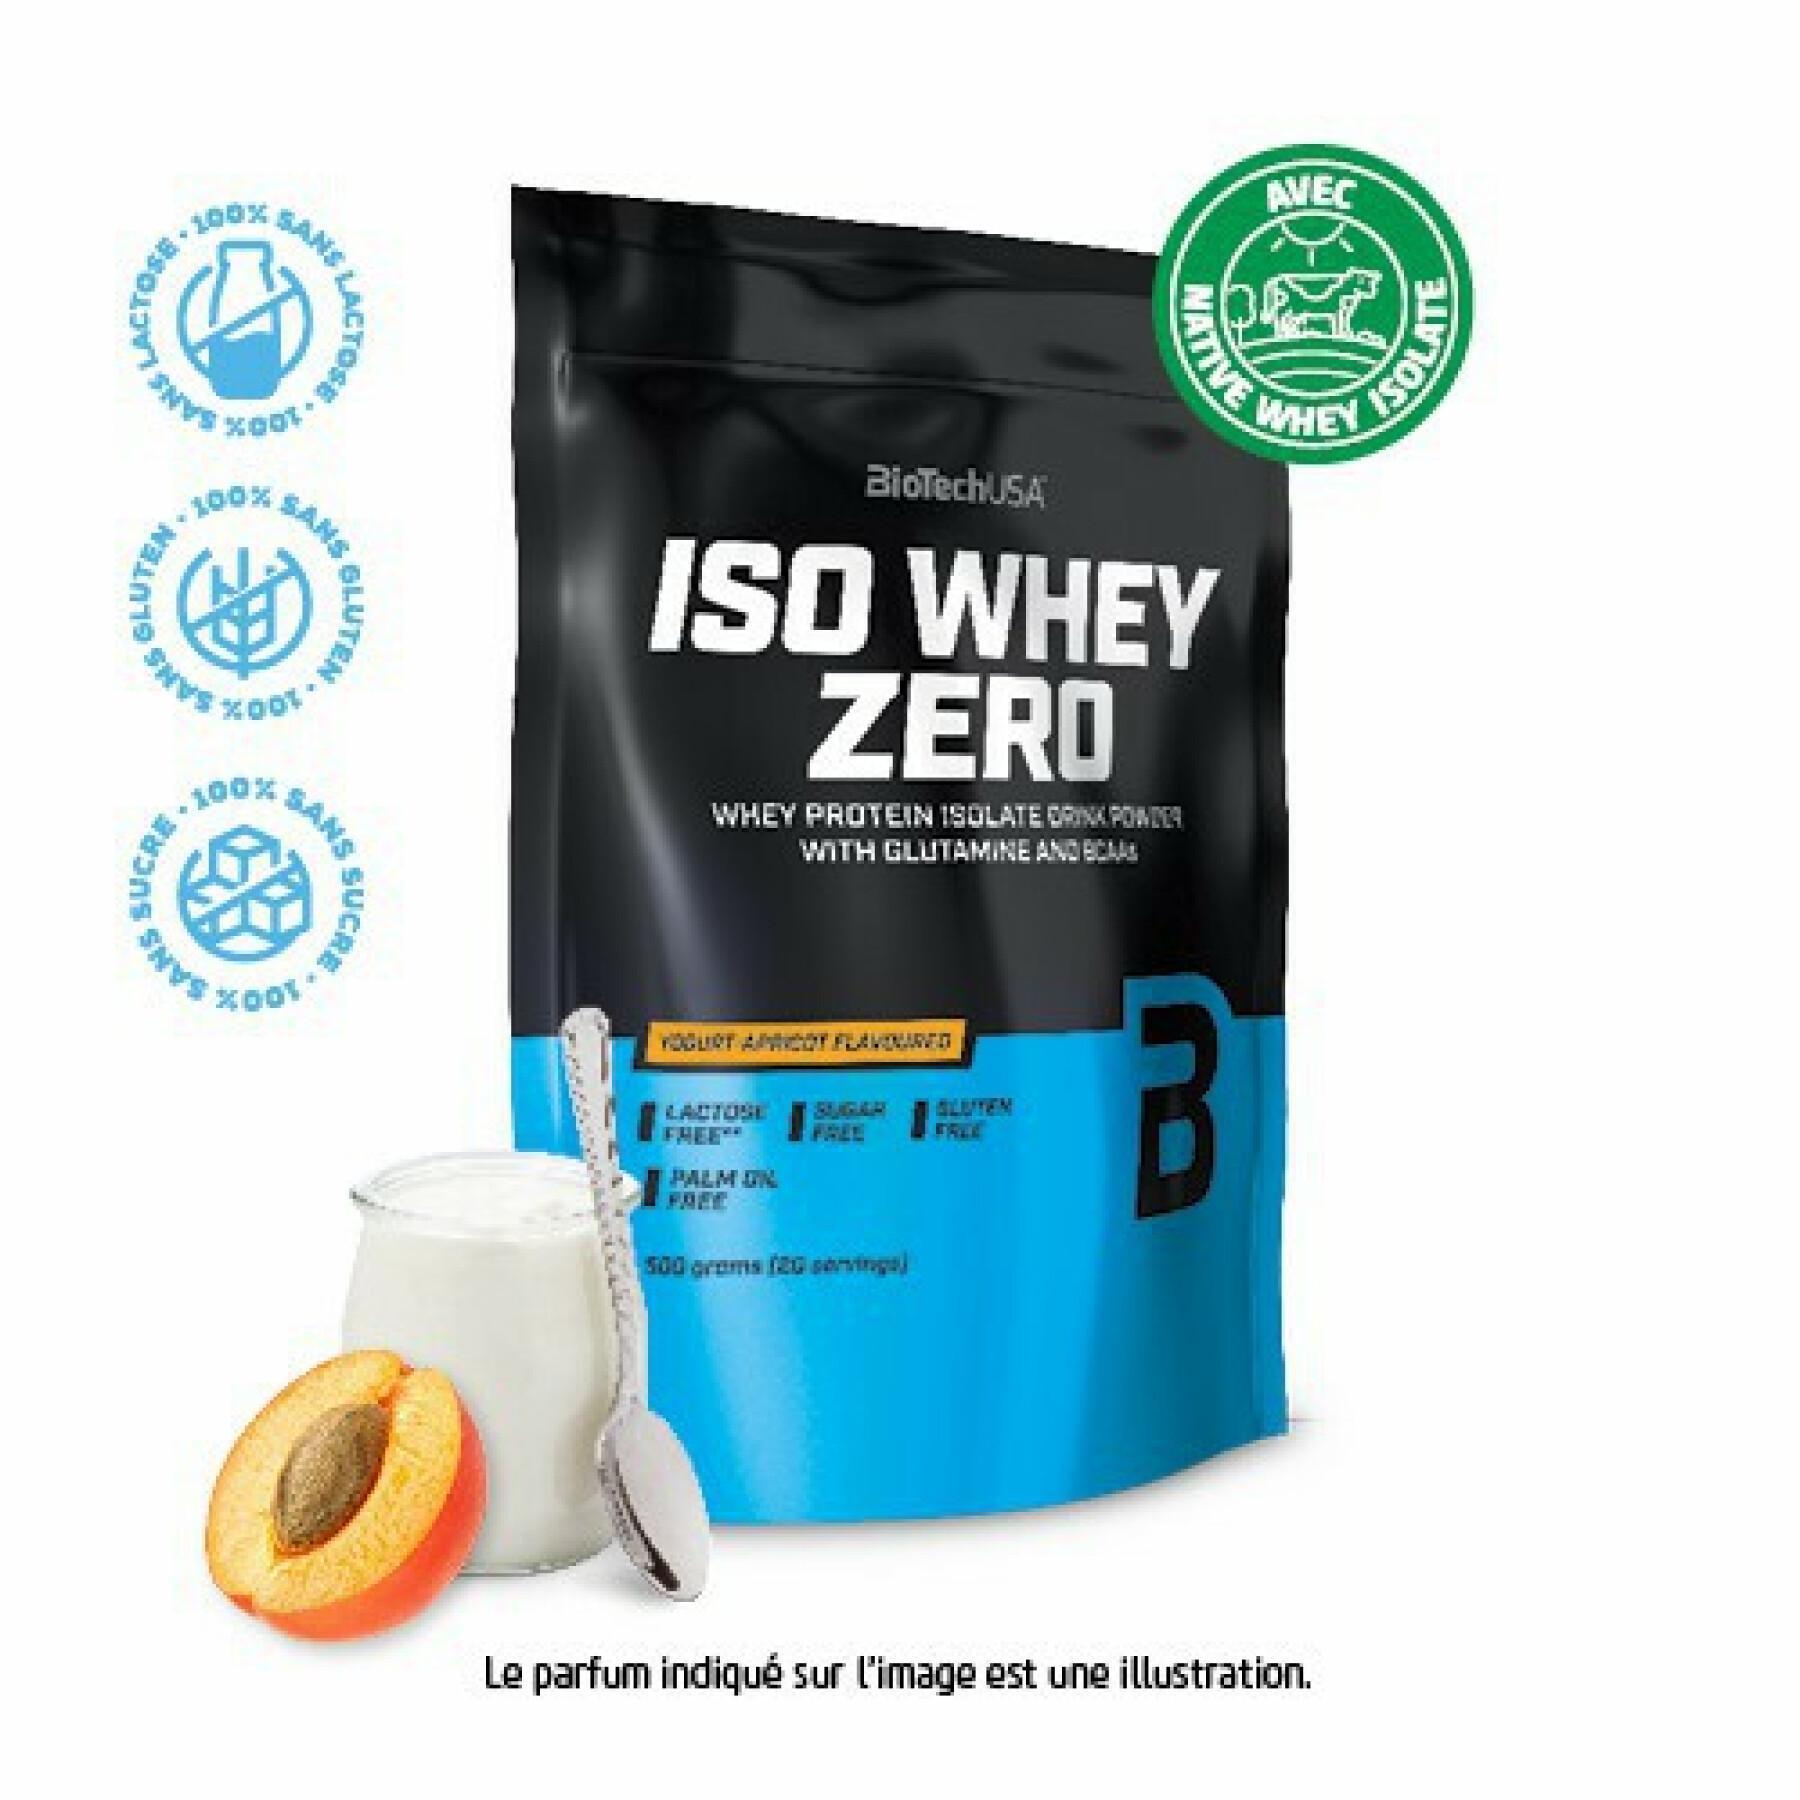 Pak van 10 zakjes proteïne Biotech USA iso whey zero lactose free - Brioche á la cannelle - 500g